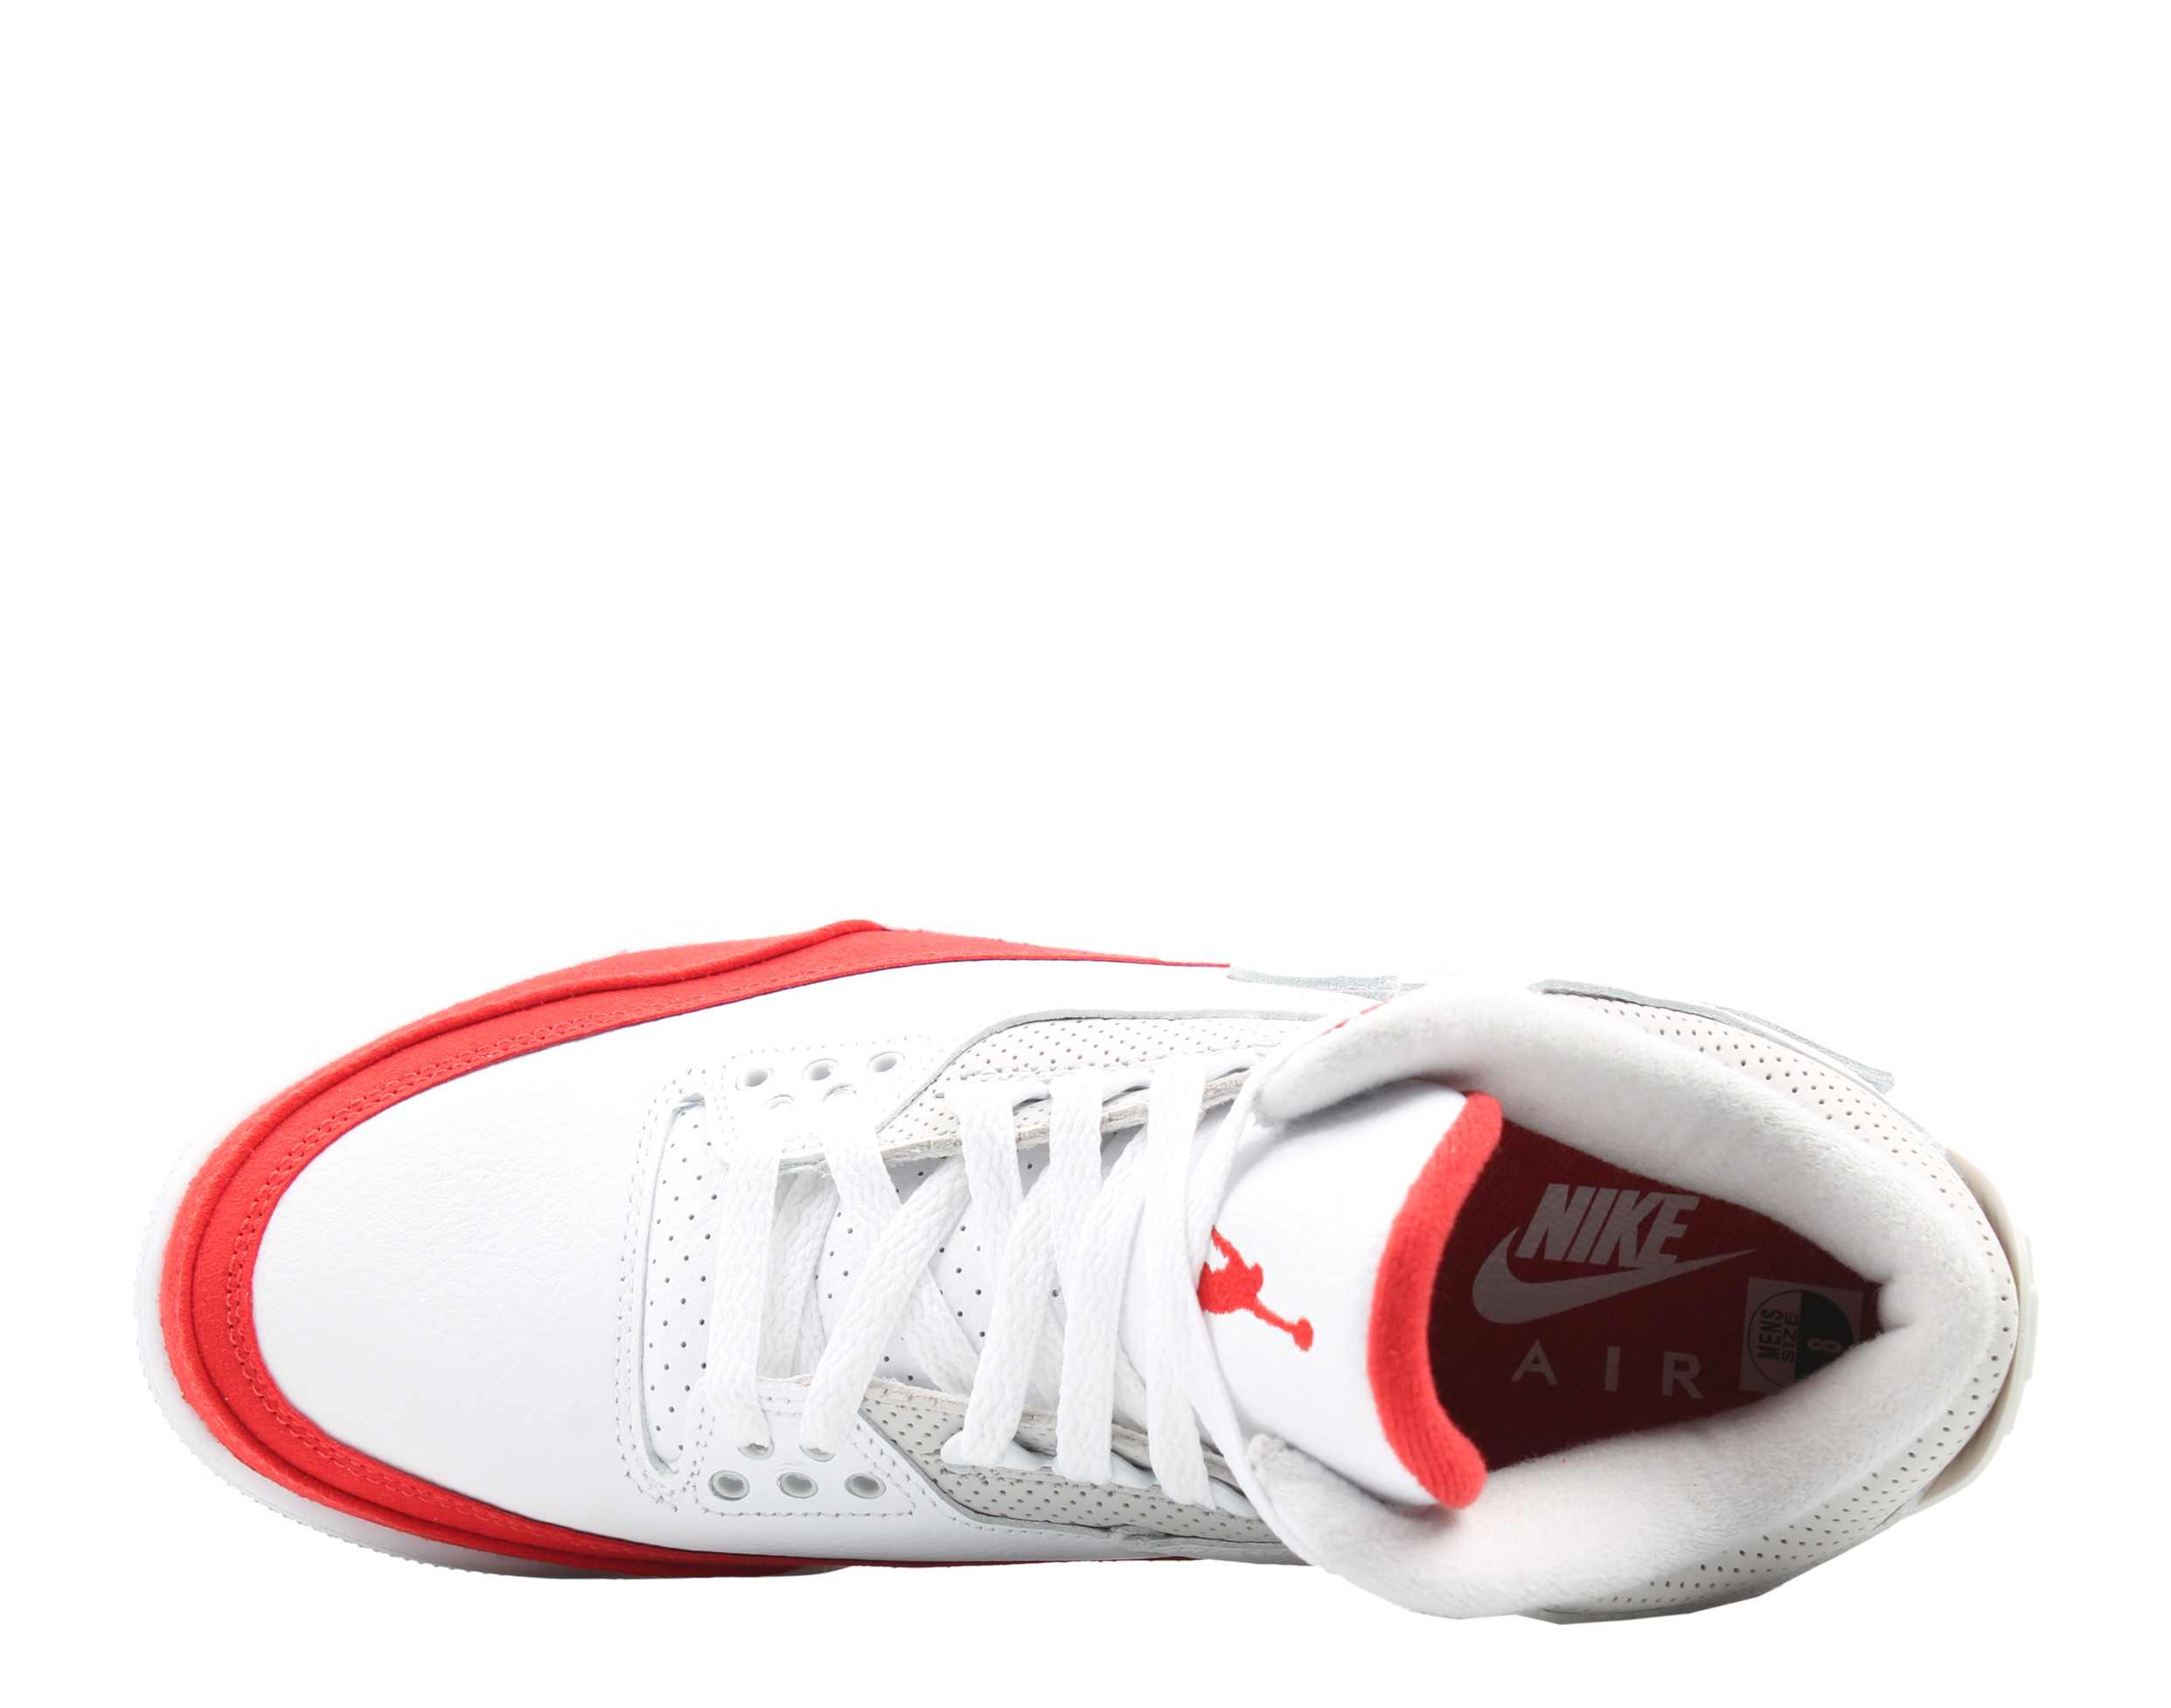 Nike Air Jordan 3 Retro TH SP Men's Basketball Shoes Size 9.5 - image 4 of 6